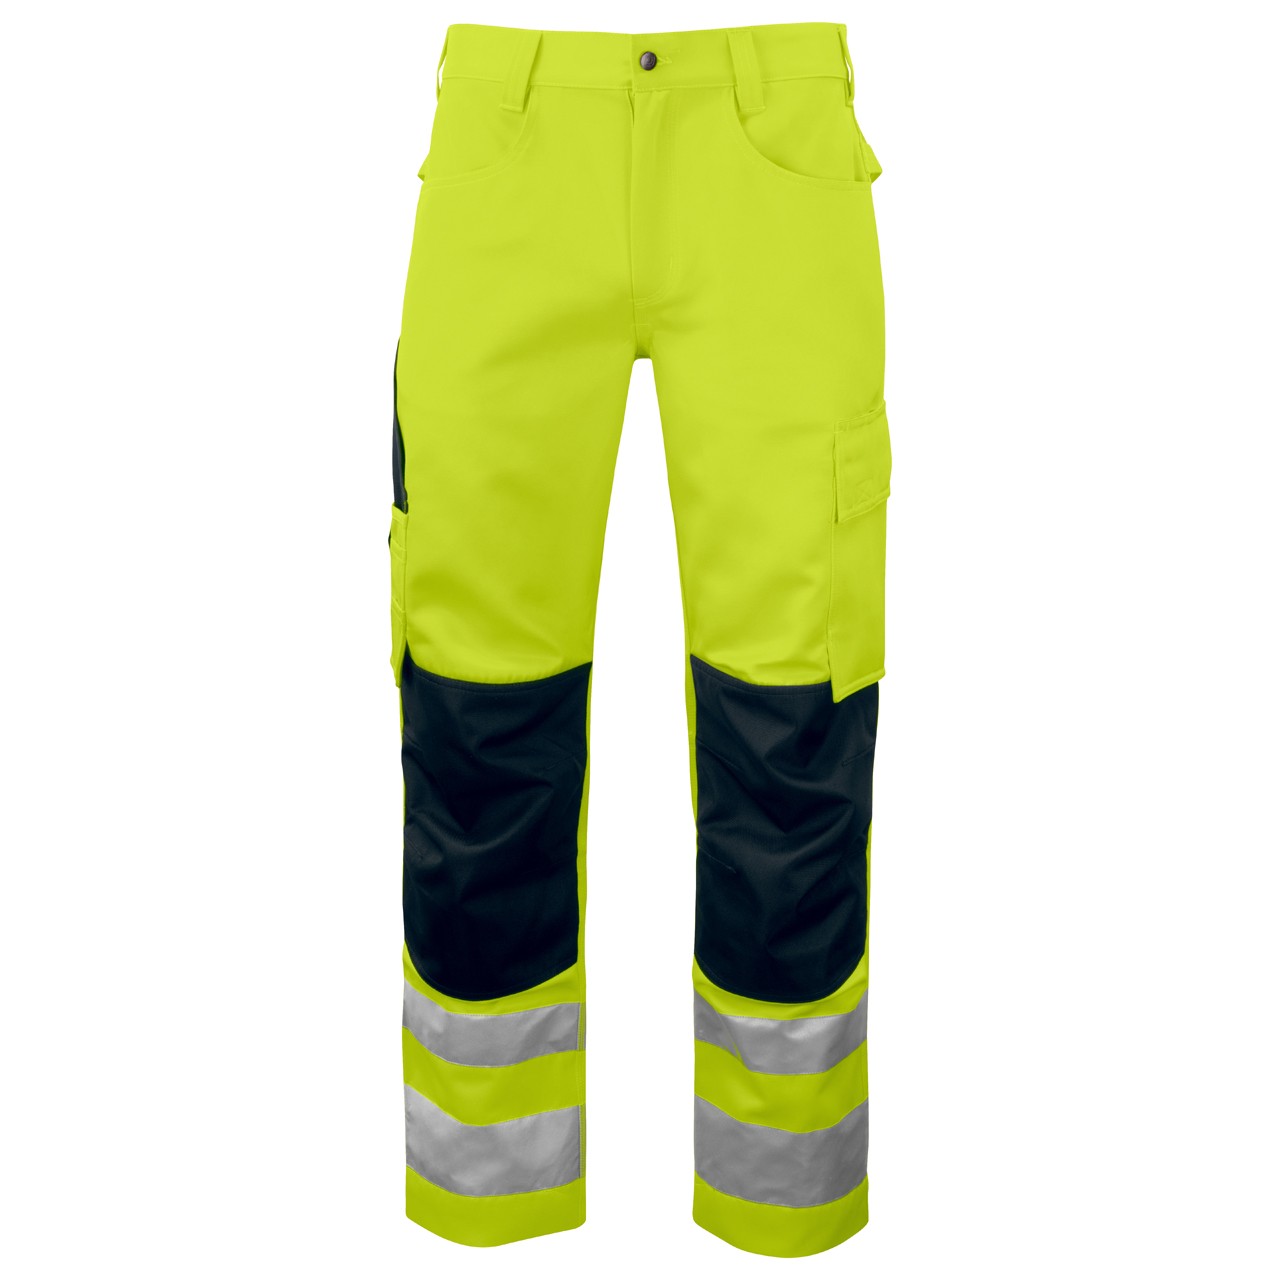 Work trousers EN ISO 20471 CLASS 2 Projob® yellow/black -11 C42